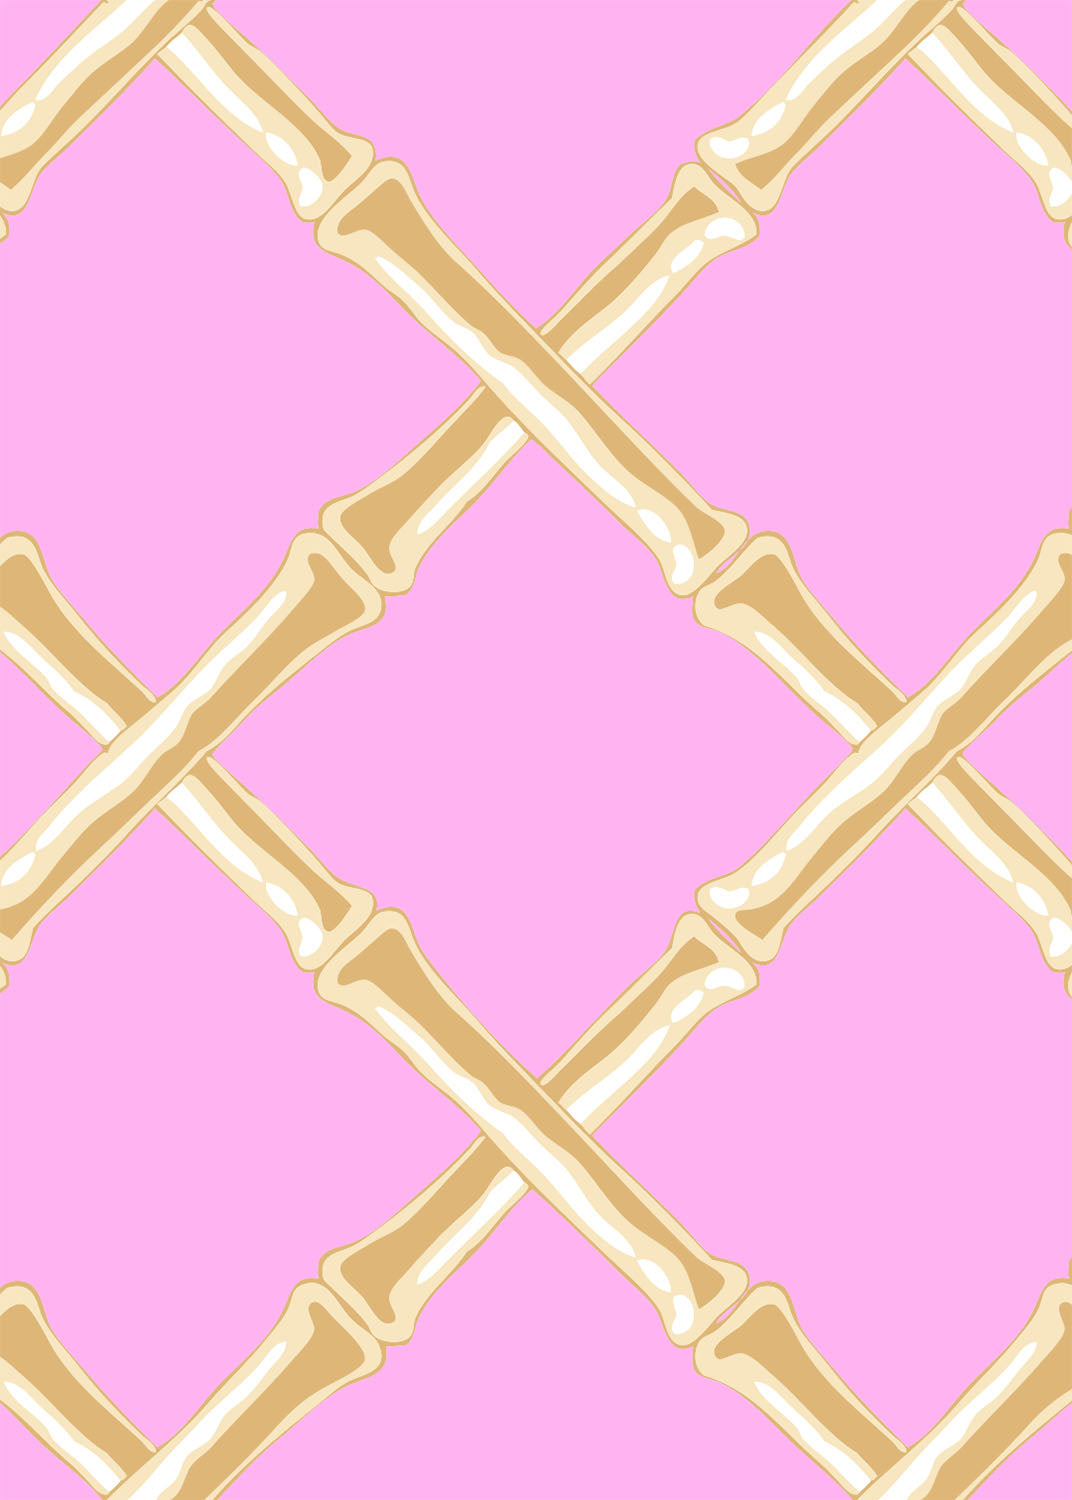 Port Dress - Bamboo Lattice Pink/Tan